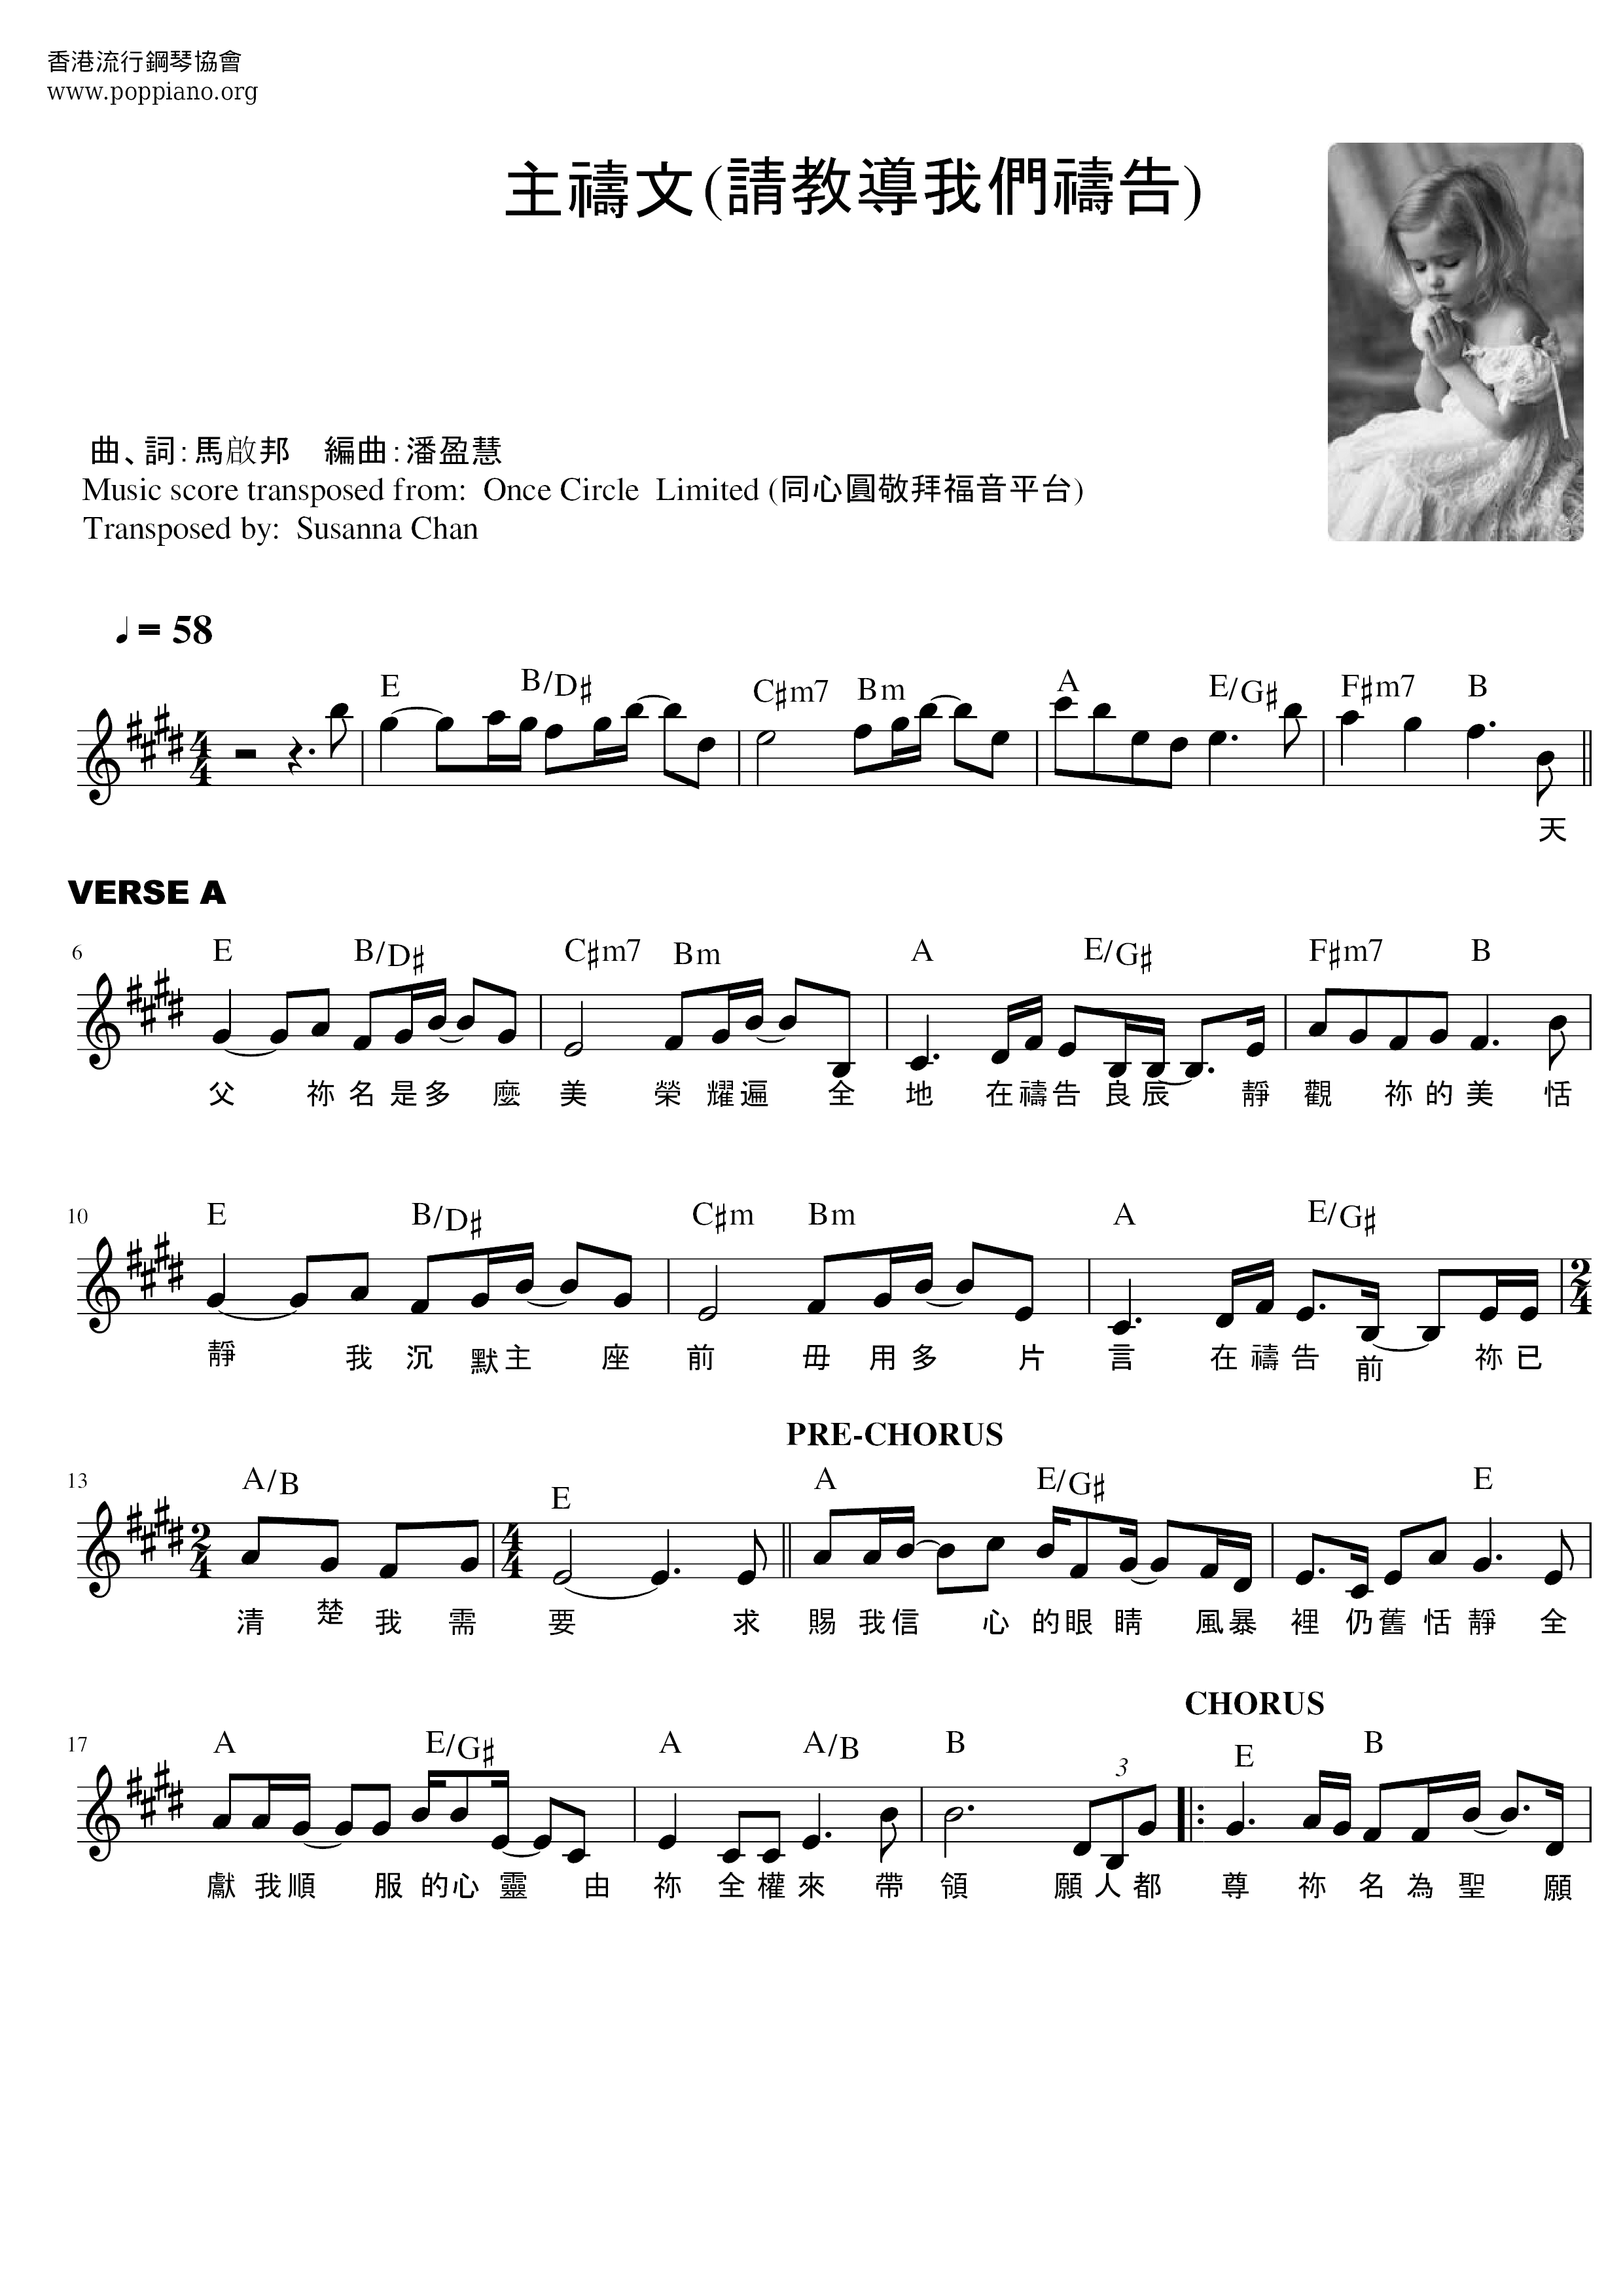 Lord's Prayer (Please Teach Us To Pray) Score